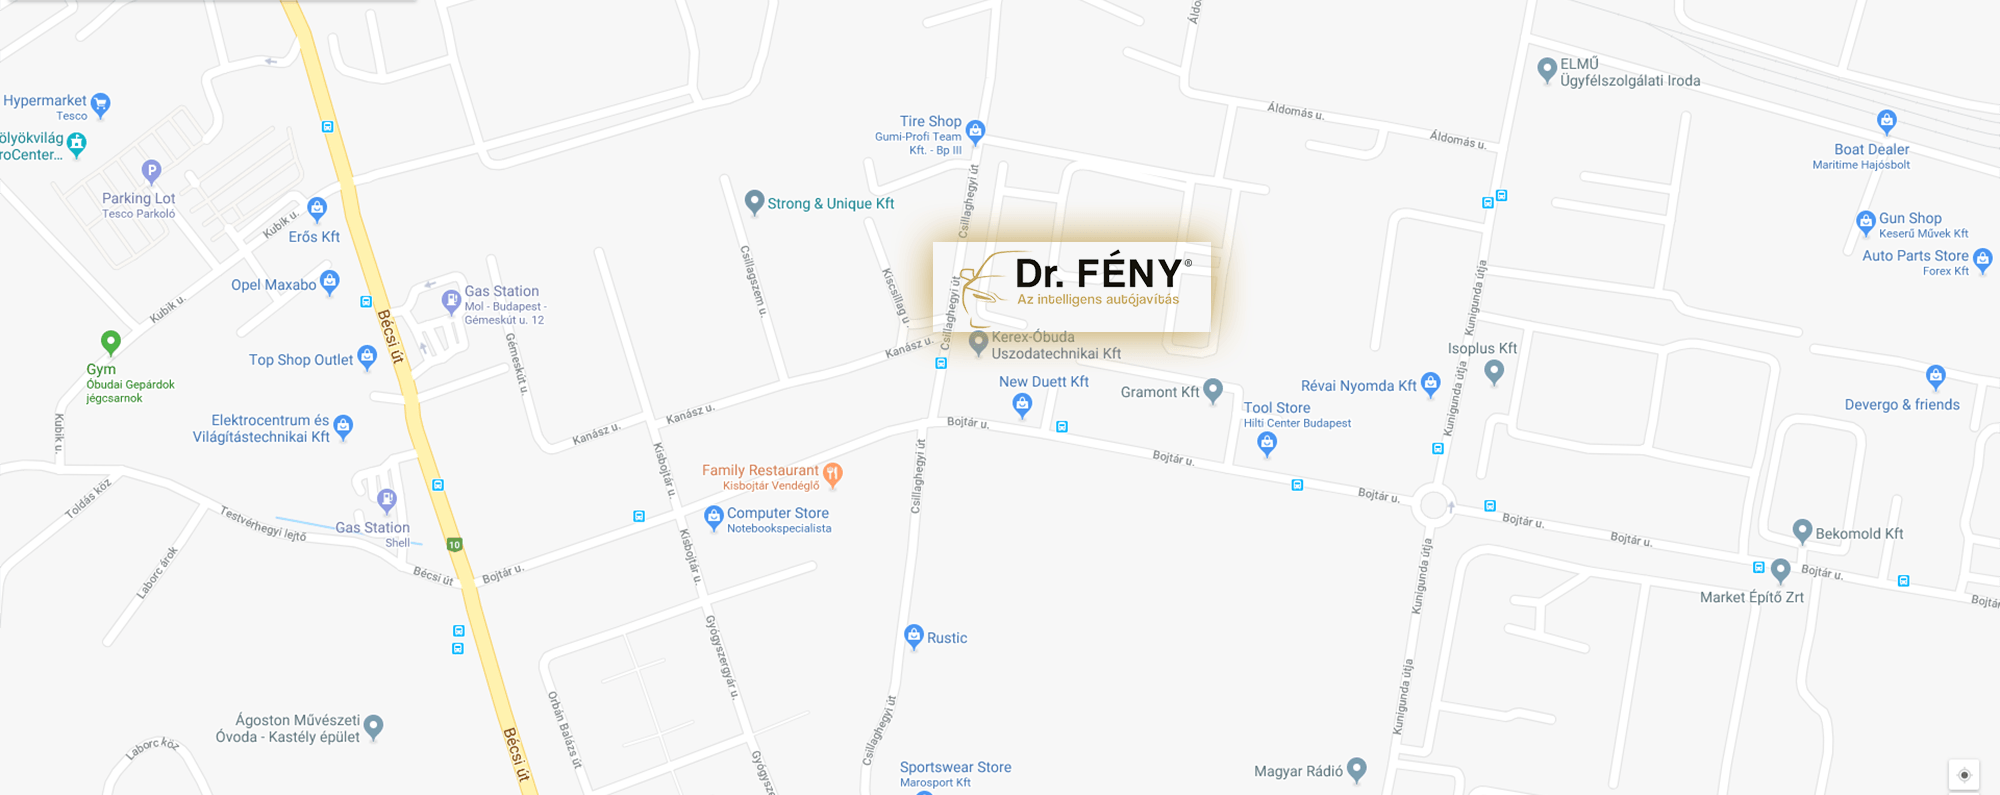 Dr. FÉNY